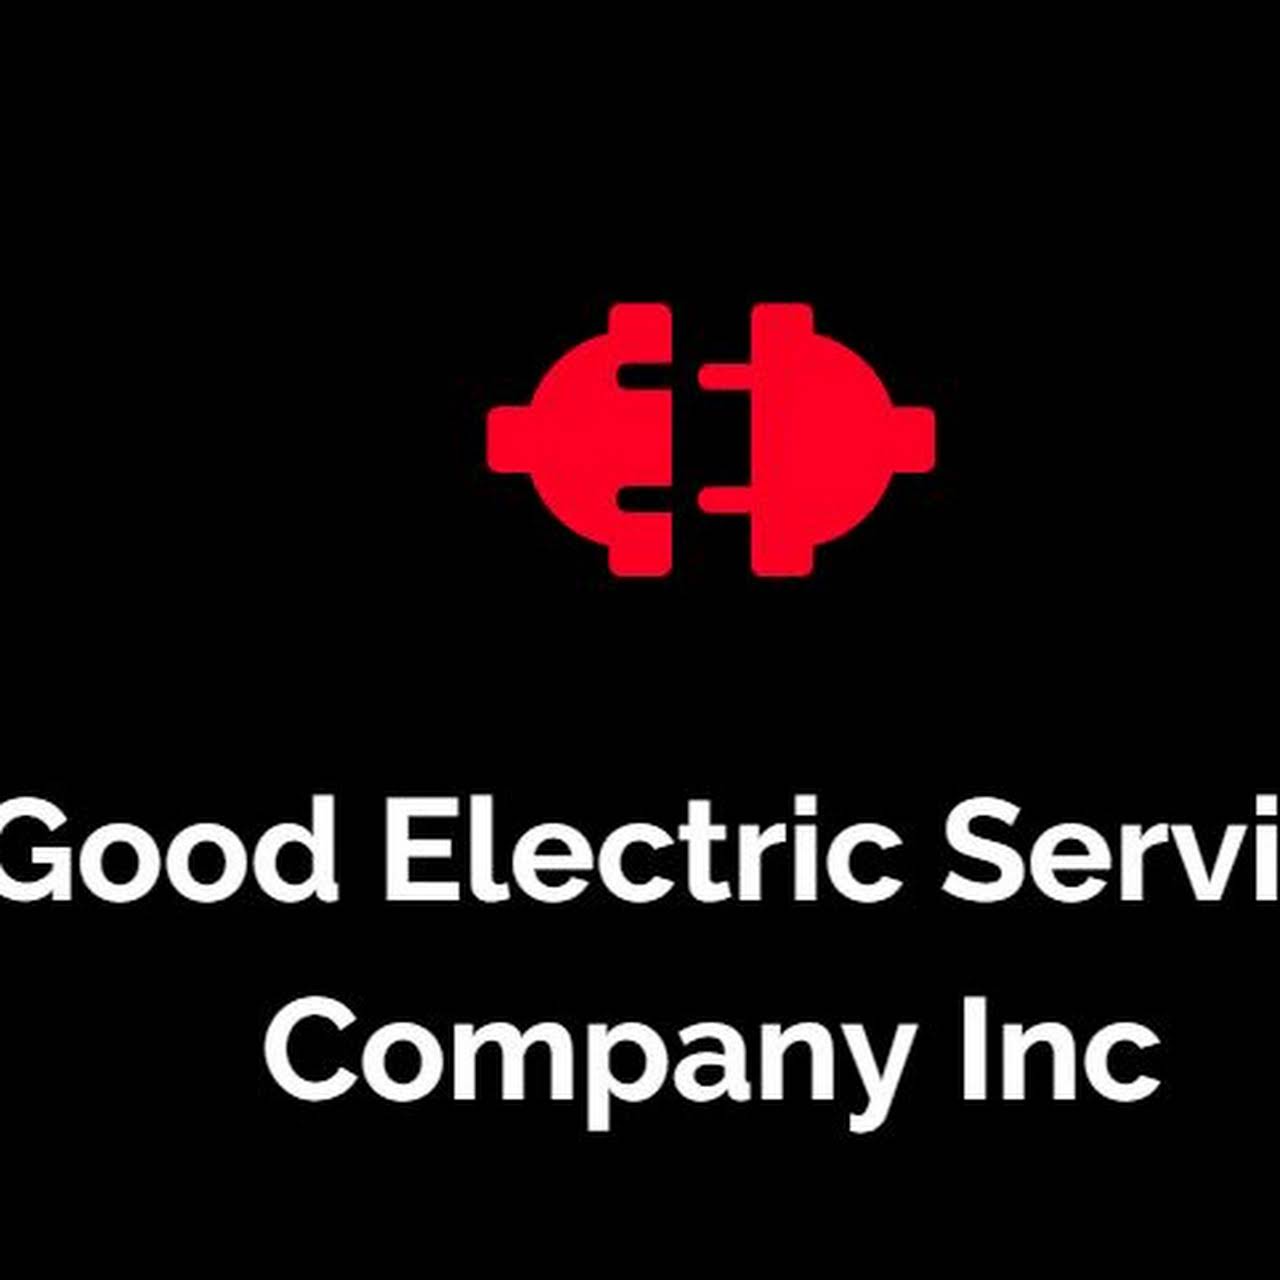 Good Electric Service Company Inc